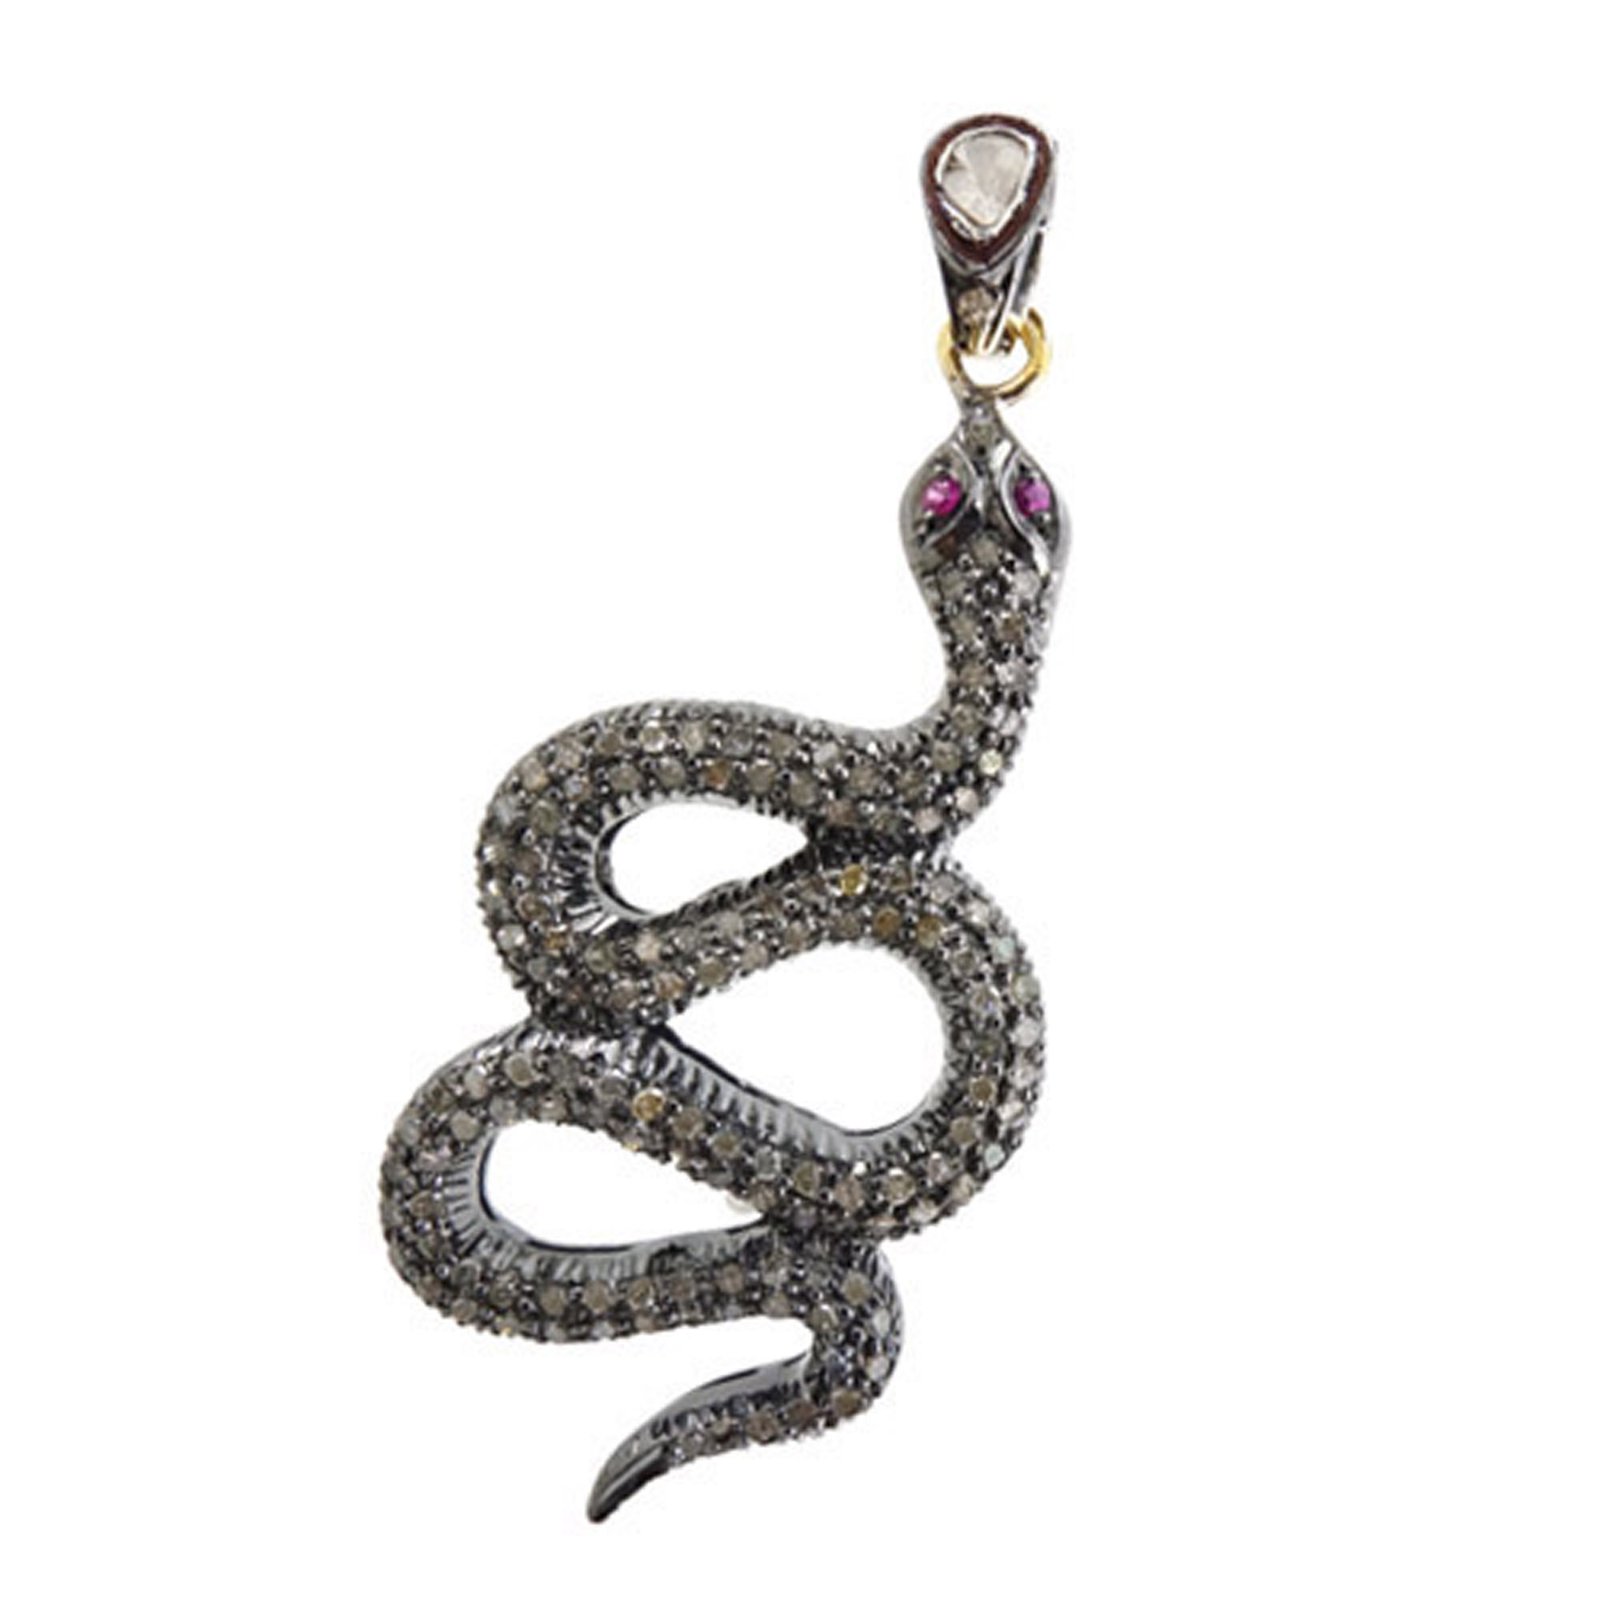 Real diamond big snake vintage jewelry